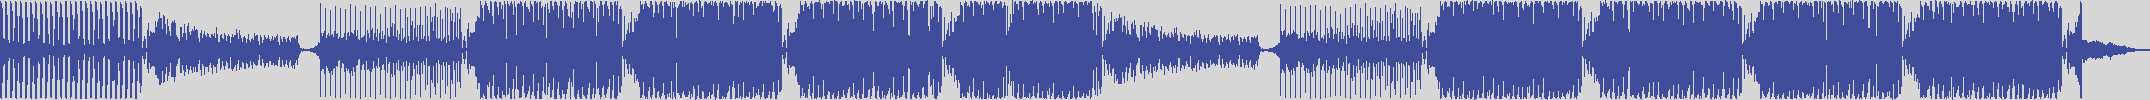 nf_boyz_records [NFY043] Pasqual Maravilla - Shot of Passion [Roger Aston's Fashion Mix] audio wave form